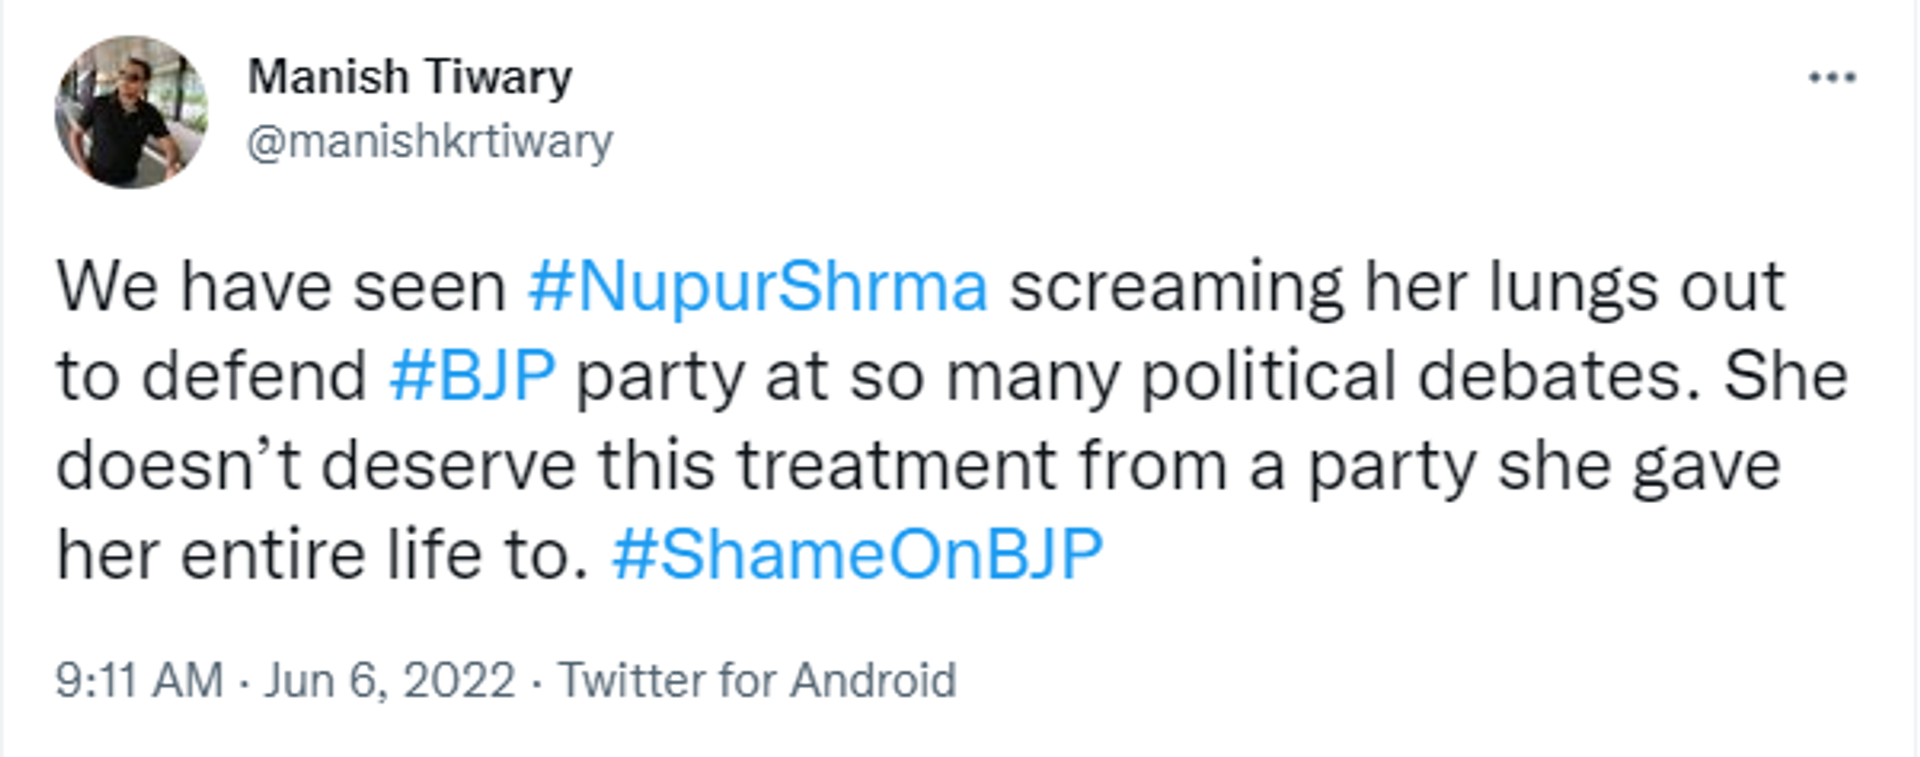 One Twitter User Says Nupur Sharma Didn't Deserve Such Treatment - Sputnik International, 1920, 06.06.2022